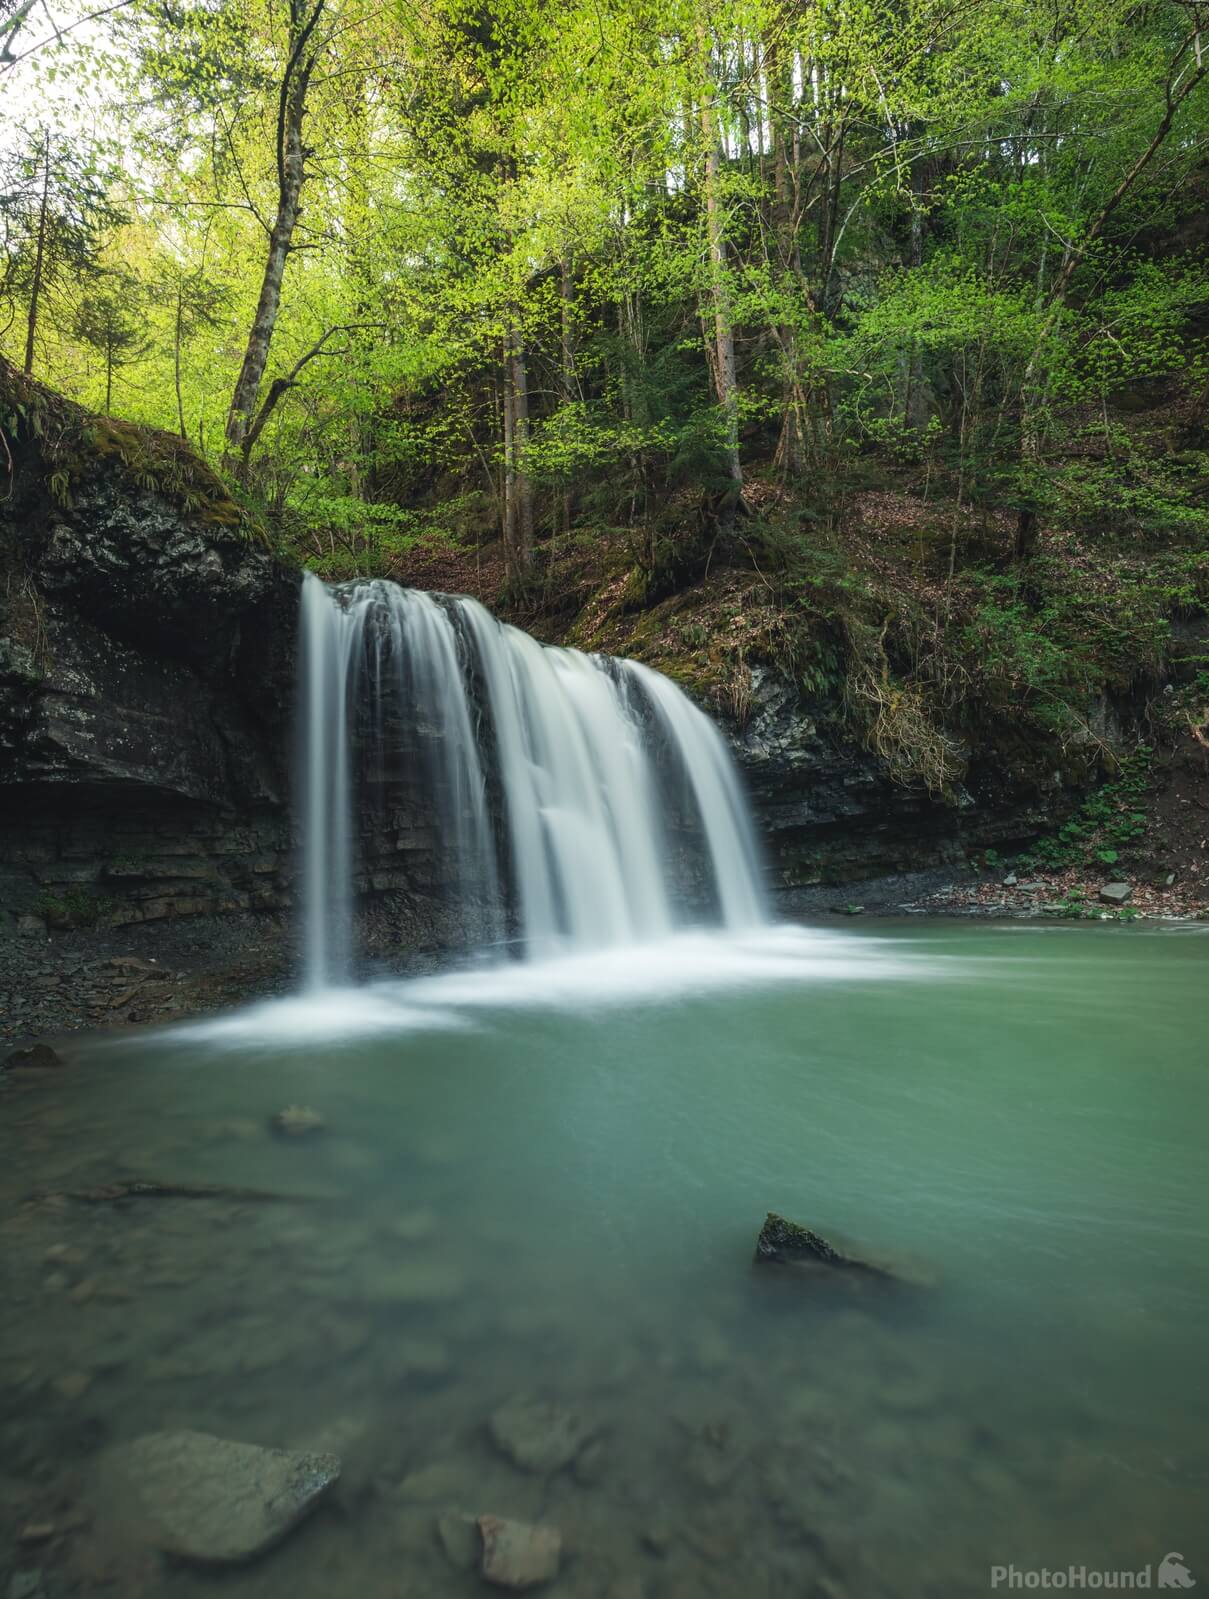 Image of Peračica waterfall by Nina Lozej